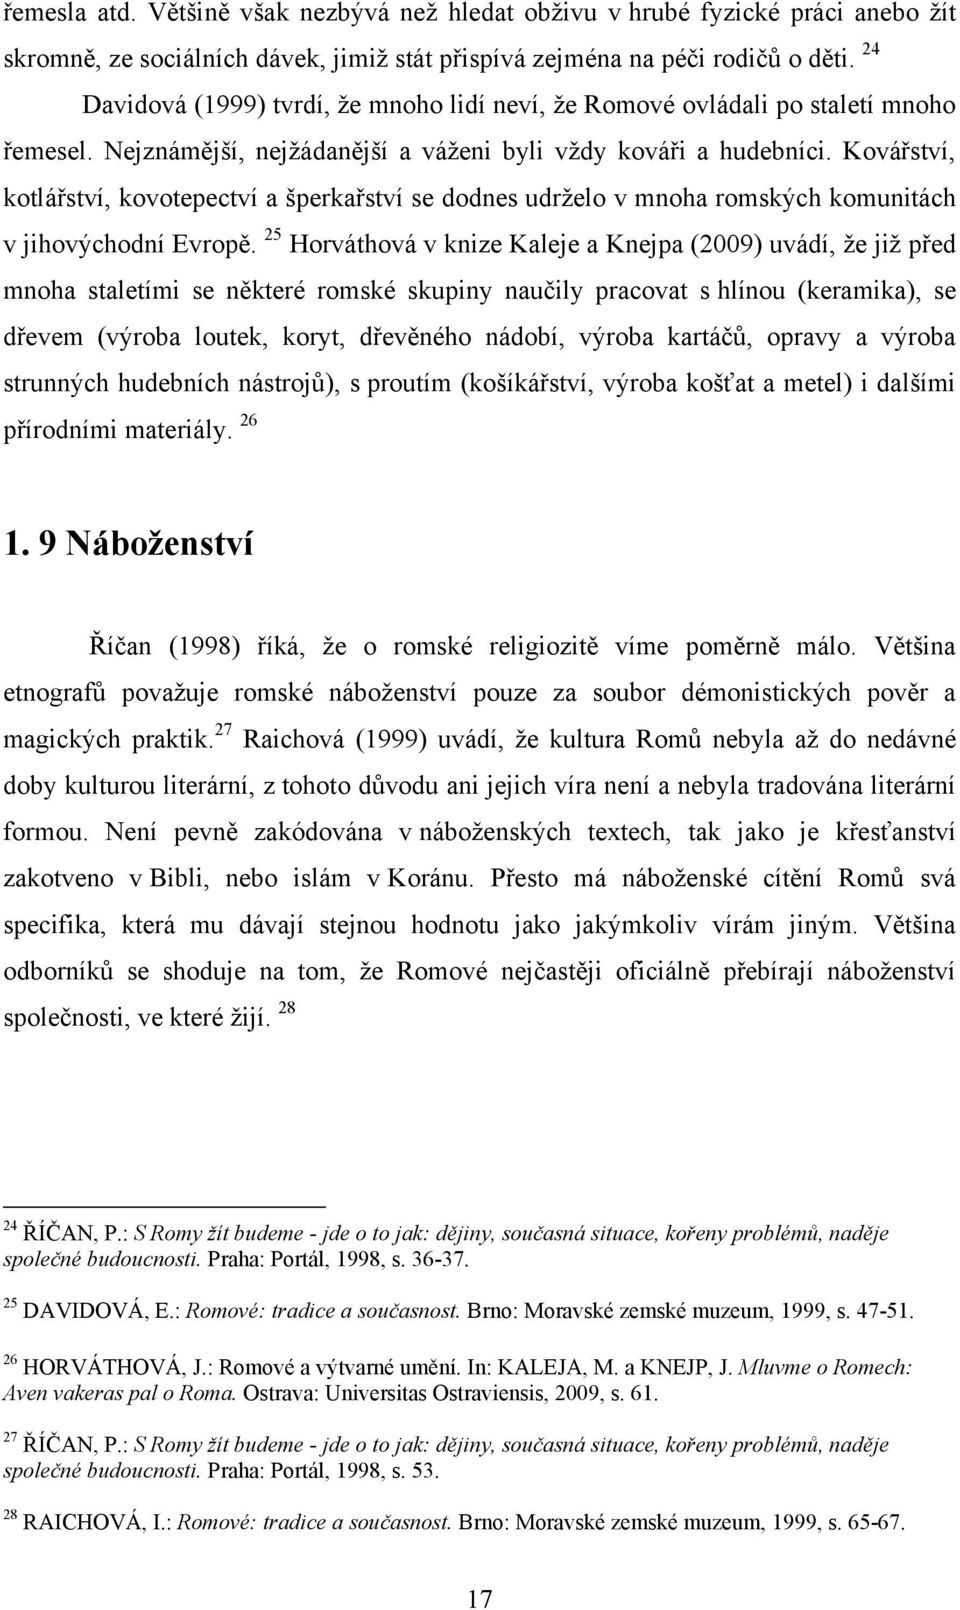 MASARYKOVA UNIVERZITA. Problematika romského etnika - PDF Free Download